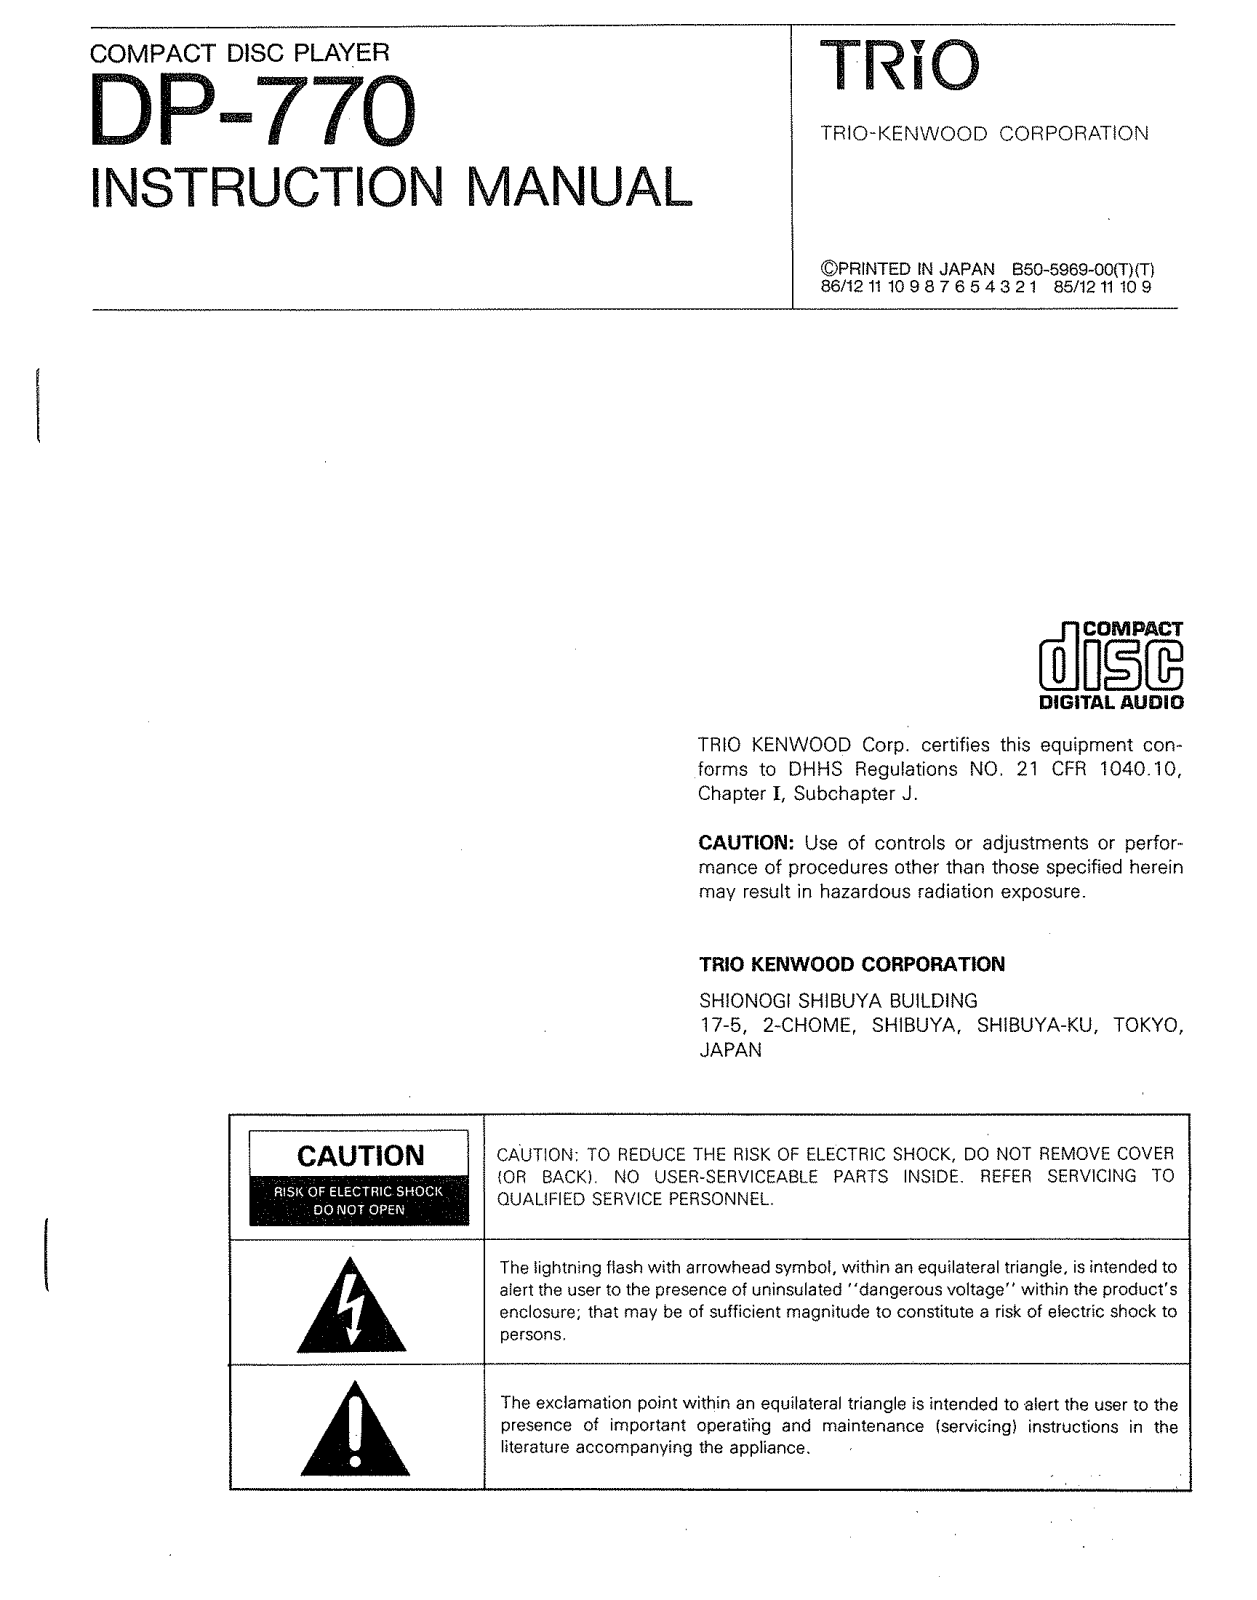 Kenwood DP-770 User Manual